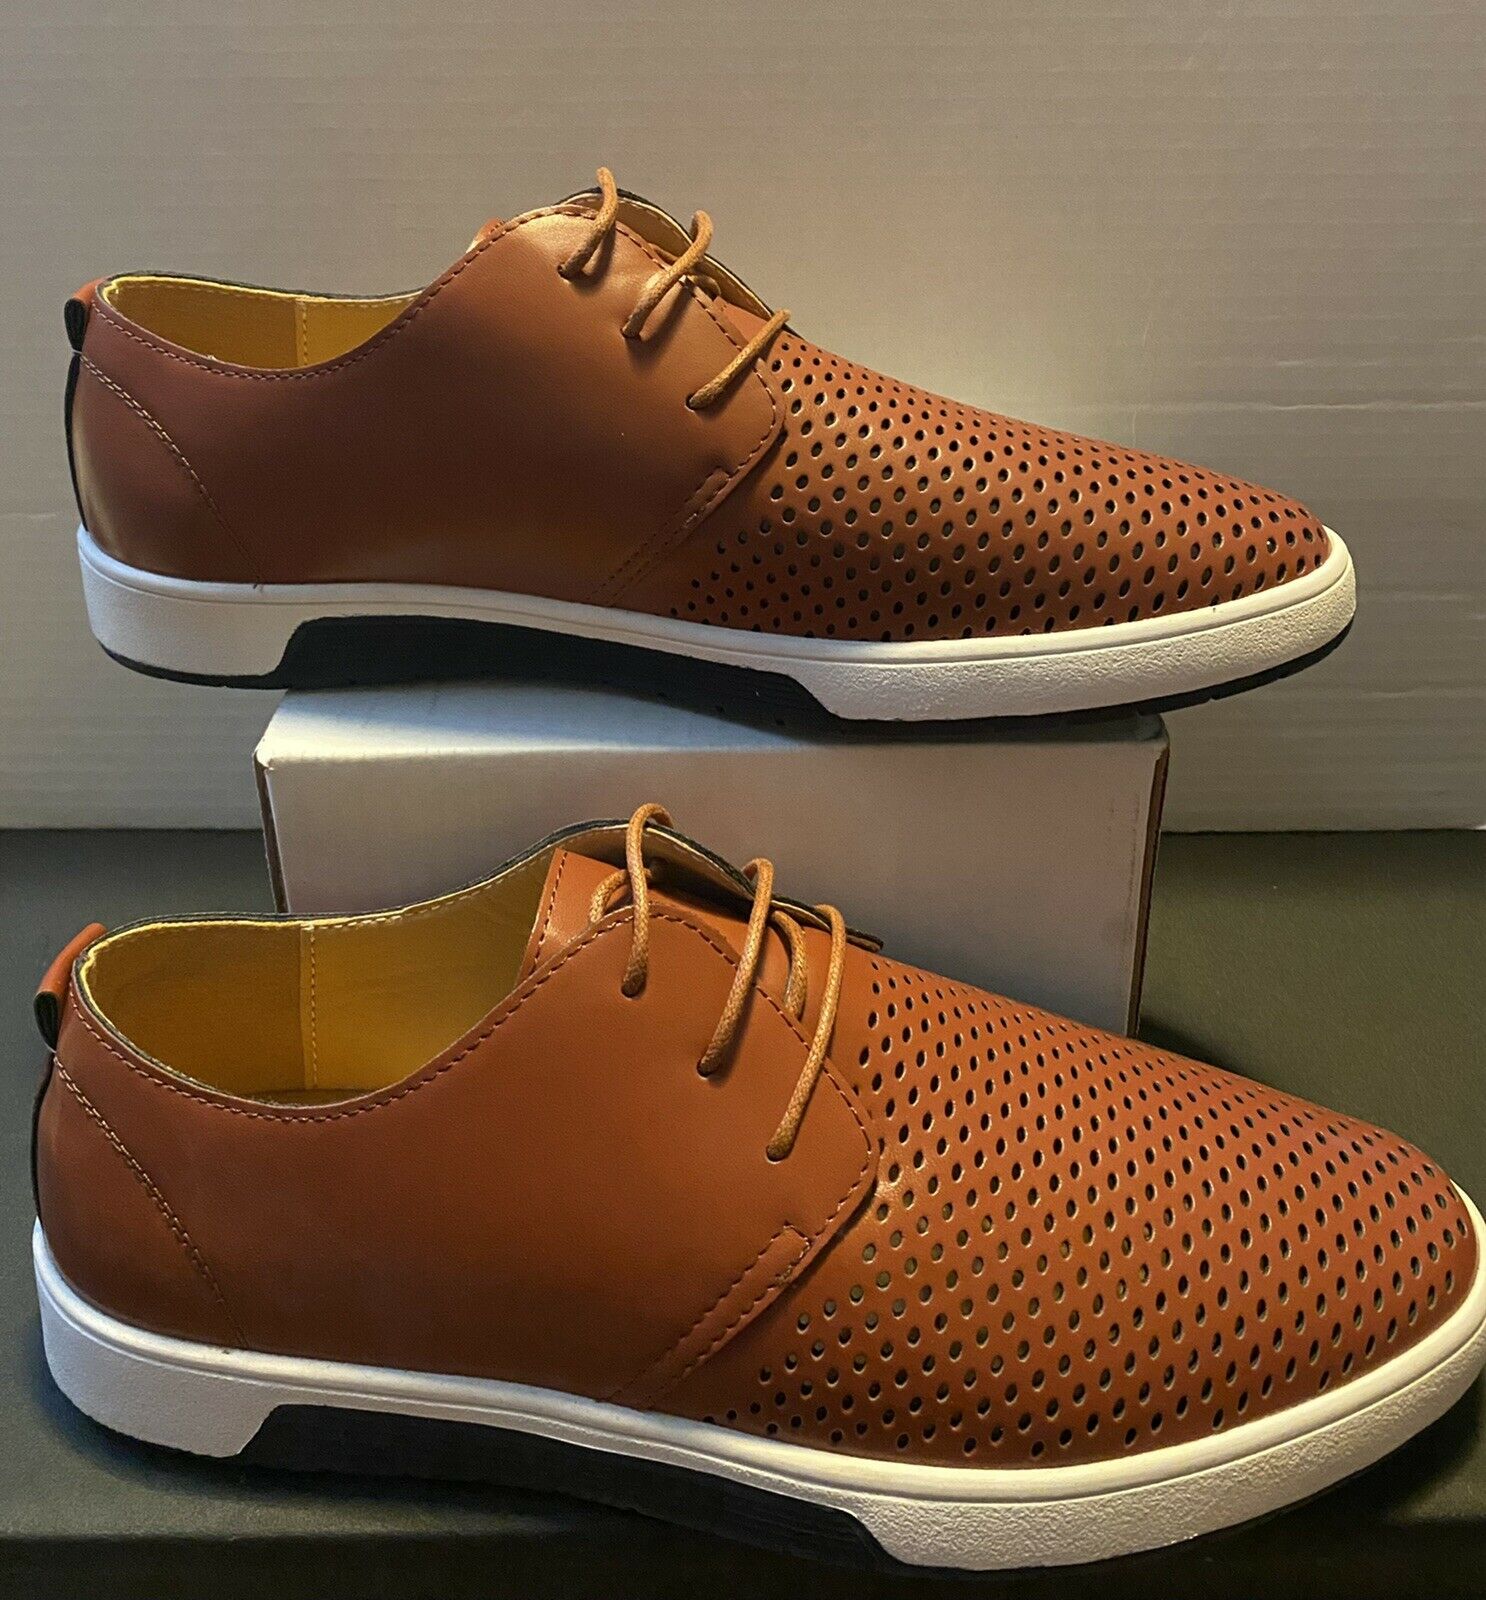 ZZHAP Men's Casual Oxford Shoes Breathable Flat Fashion sneaker Size 10